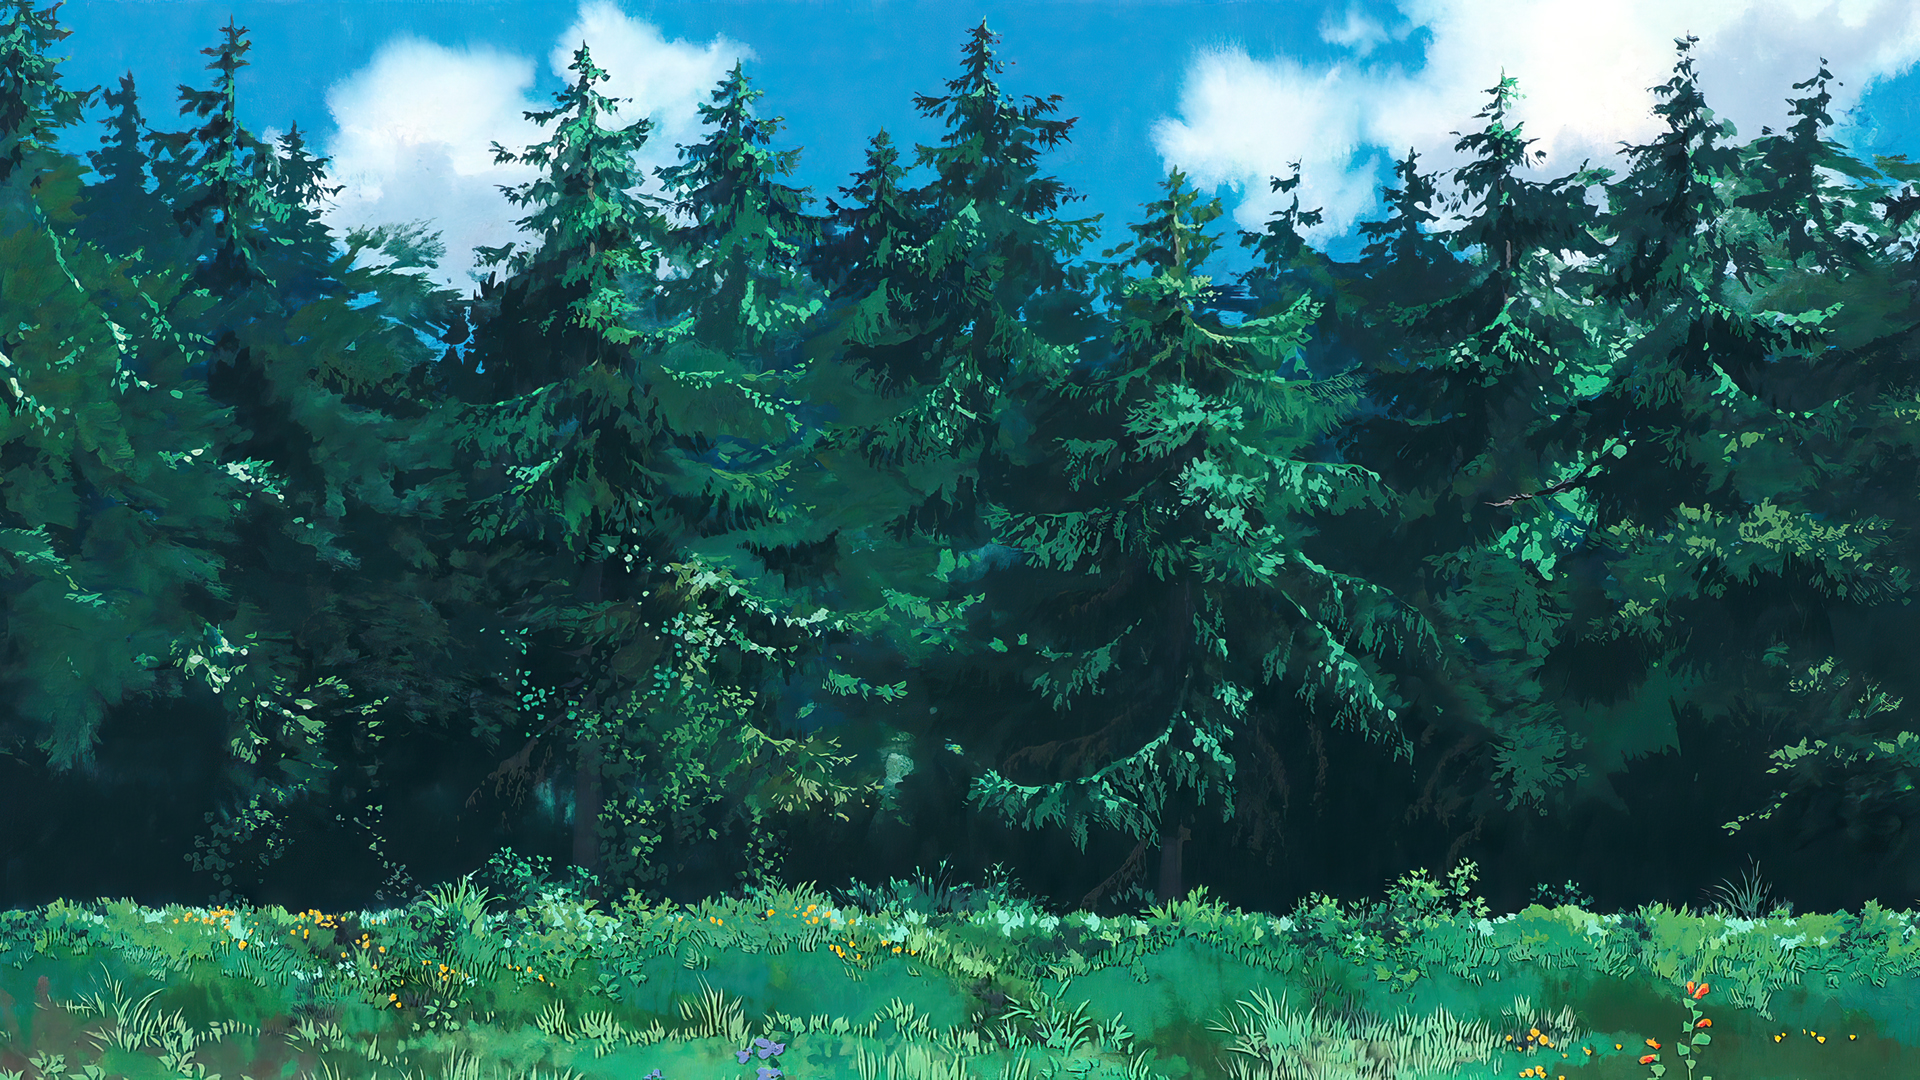 Kikis Delivery Service Animated Movies Anime Animation Film Stills Studio Ghibli Hayao Miyazaki Fore 1920x1080